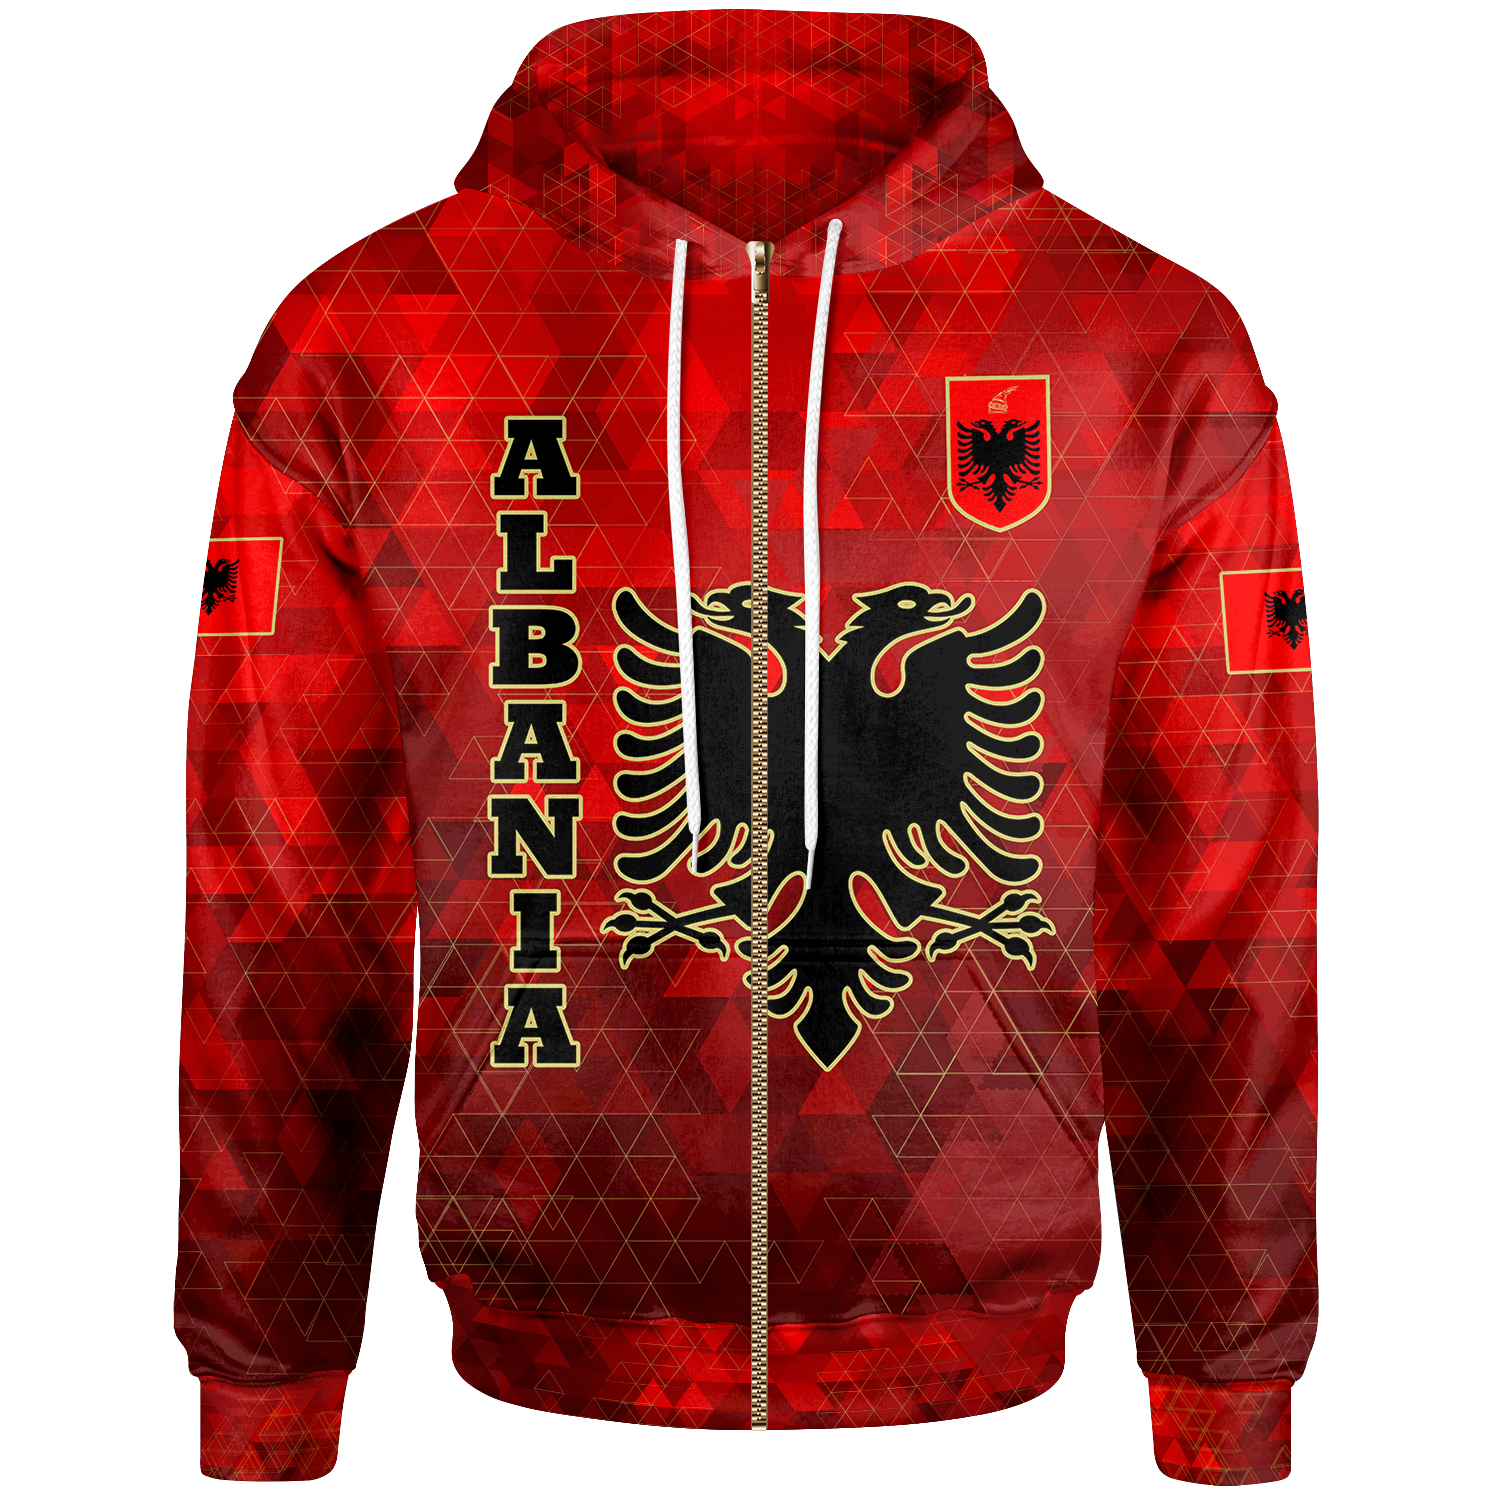 albania-zip-up-hoodie-albania-flag-polygon-style